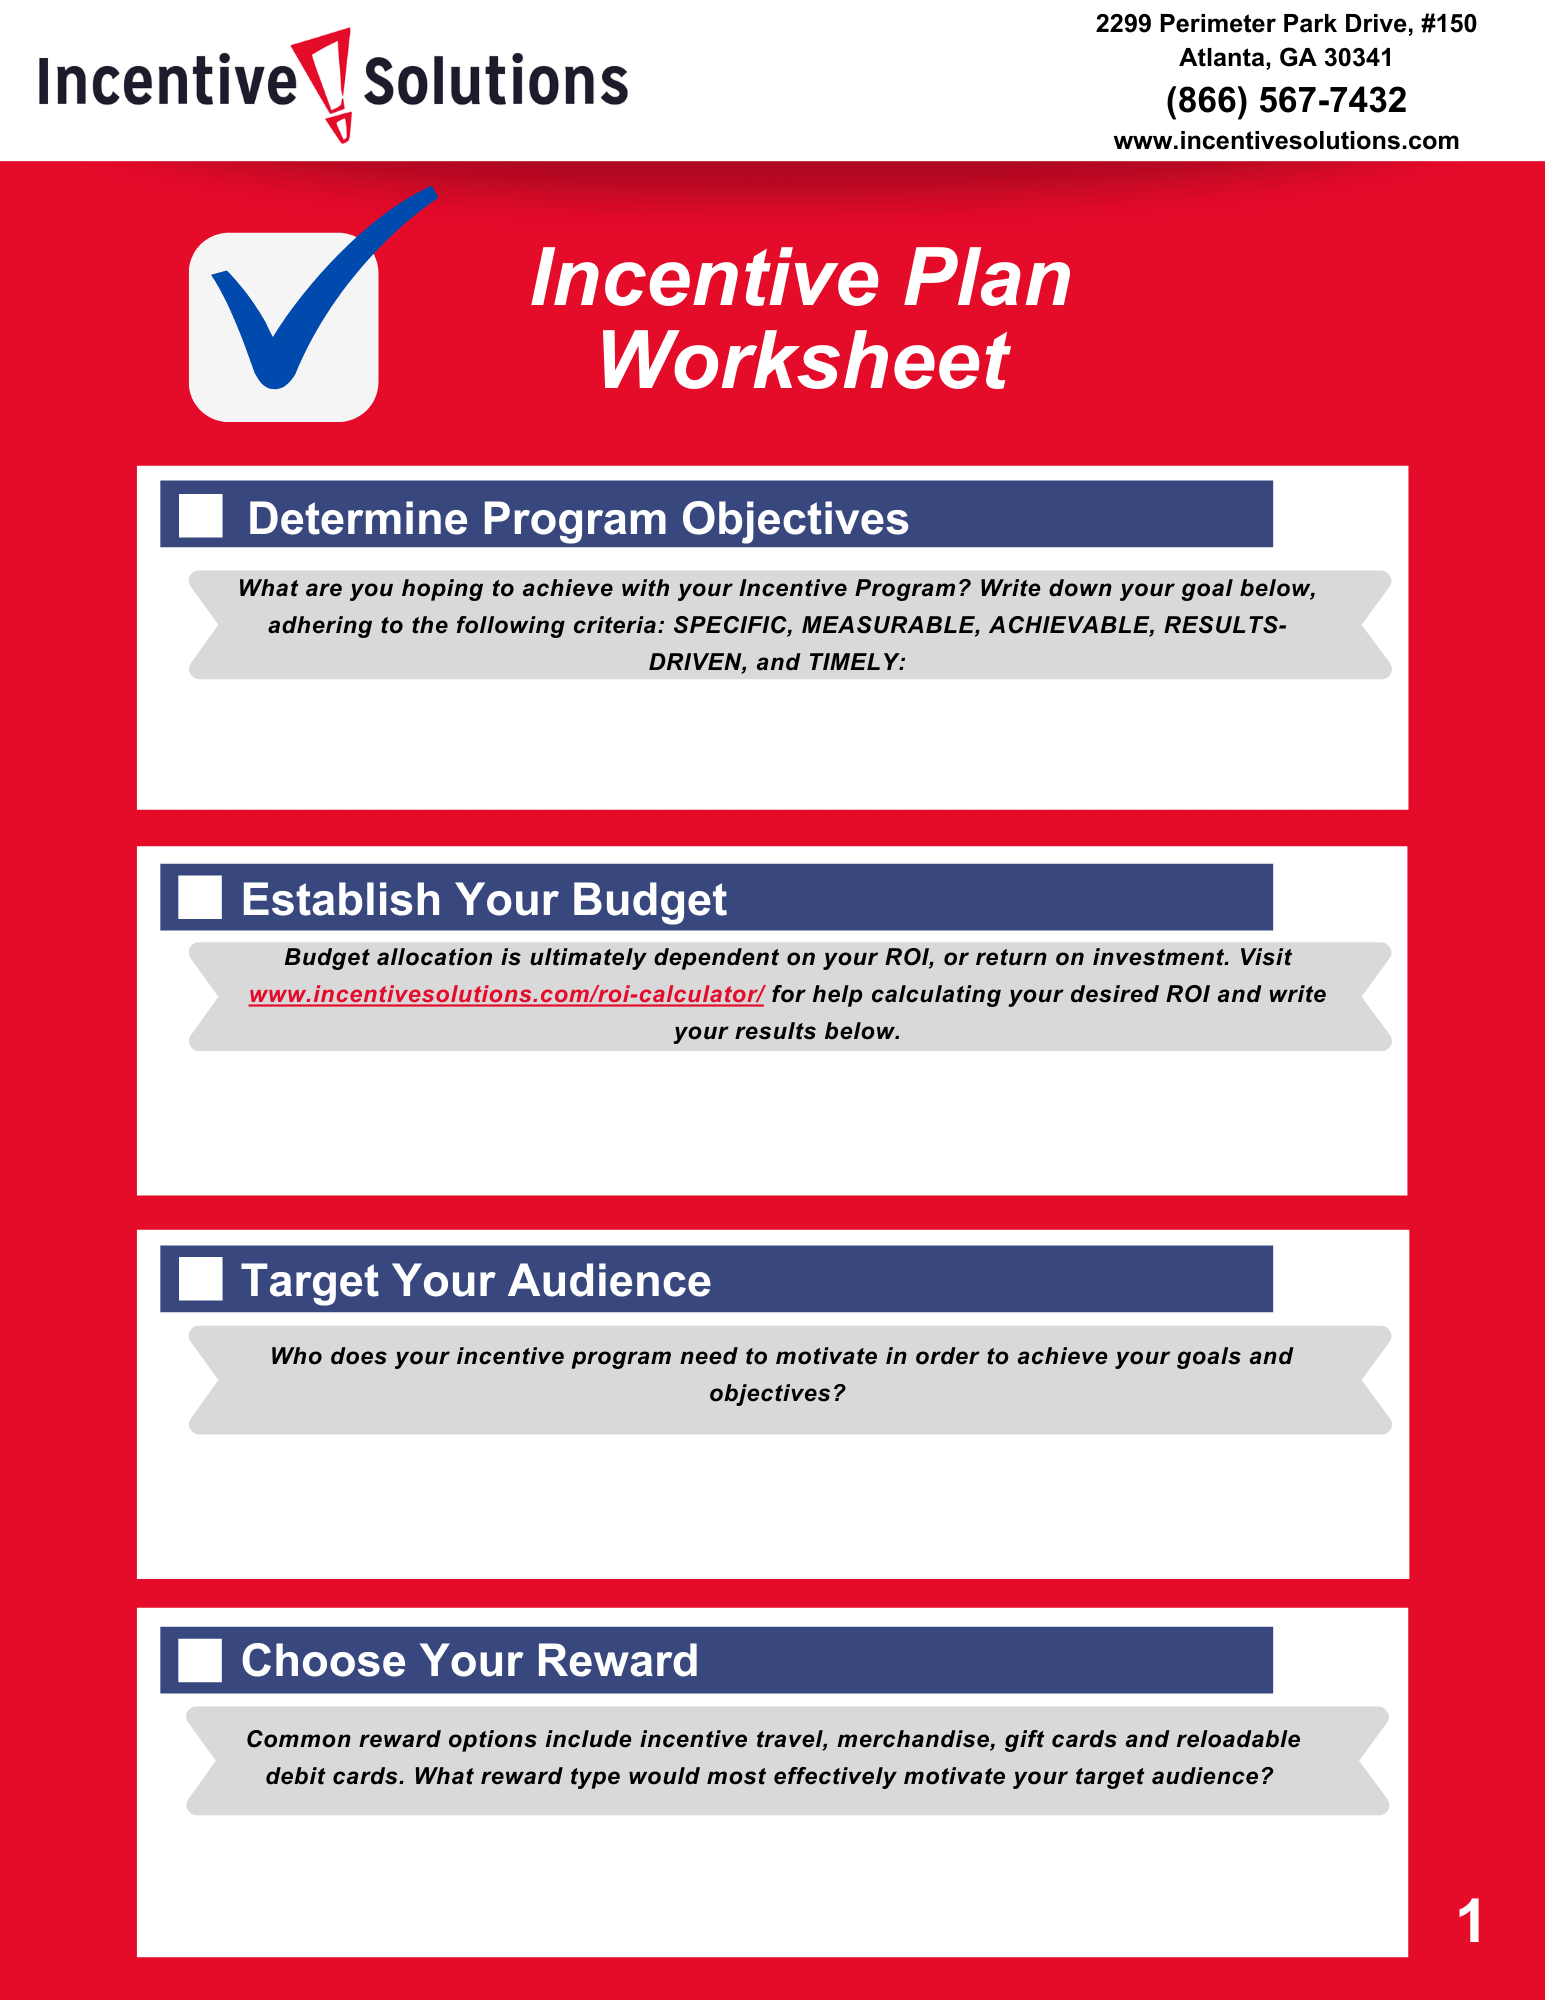 An Incentive Plan Guide: Free Download extu com